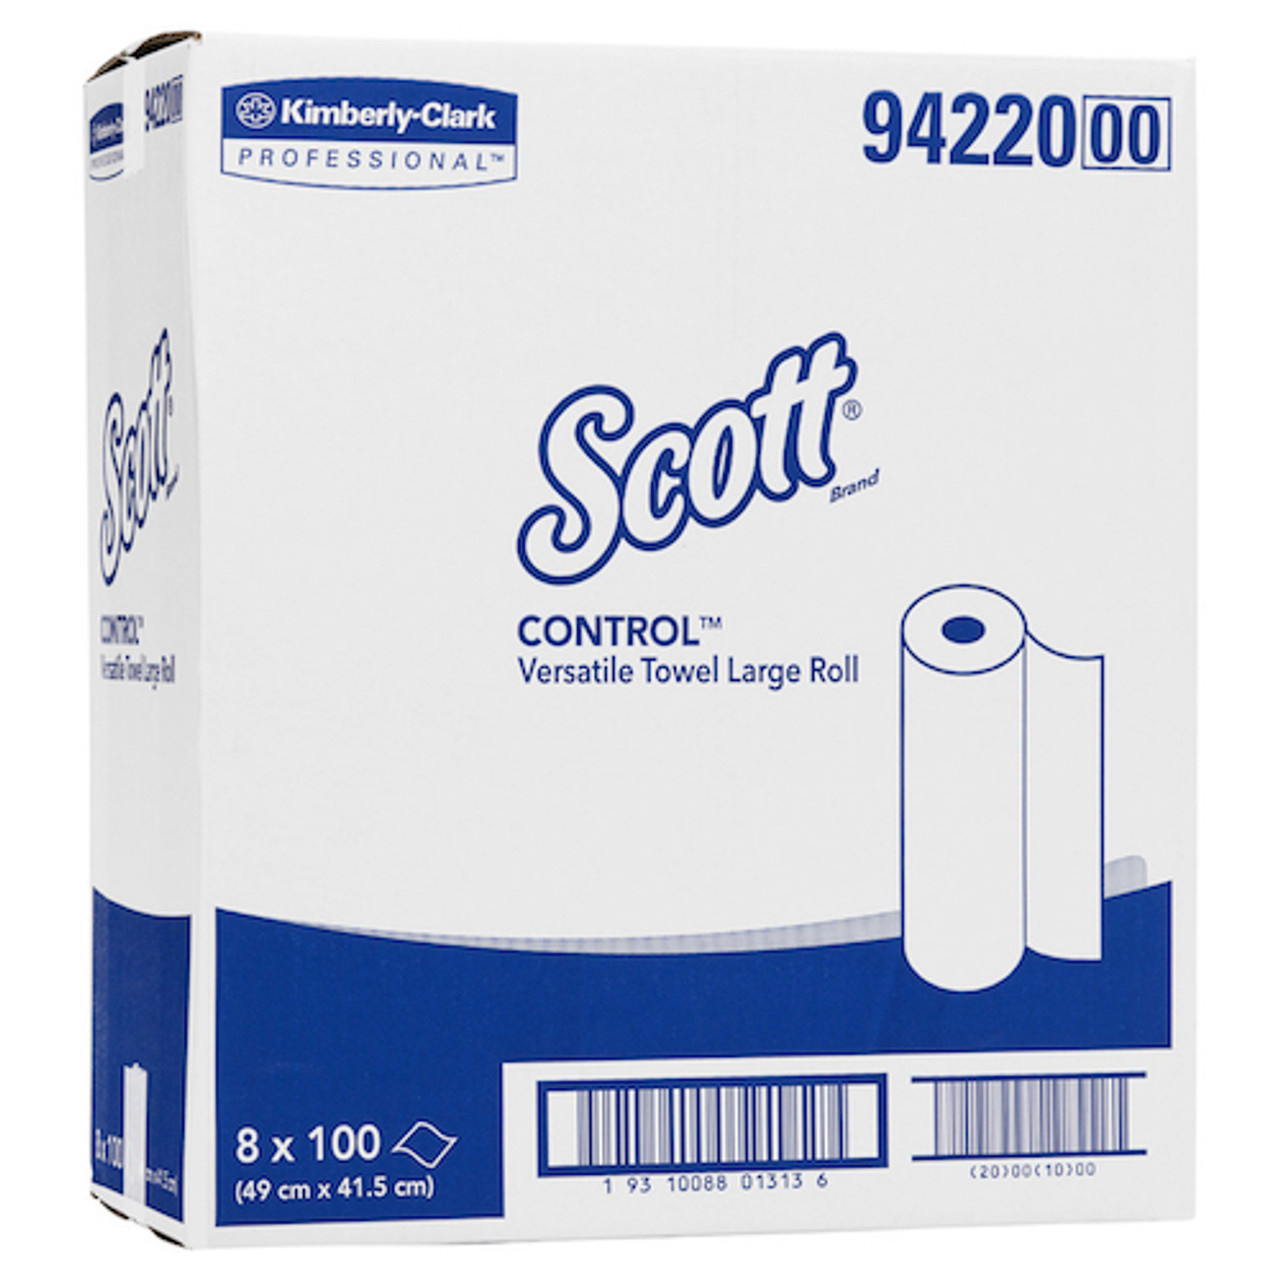 Scott Control Versatile Towel Large 49cm x 41.5cm 8 Rolls (94220)
Kimberly Clark Professional